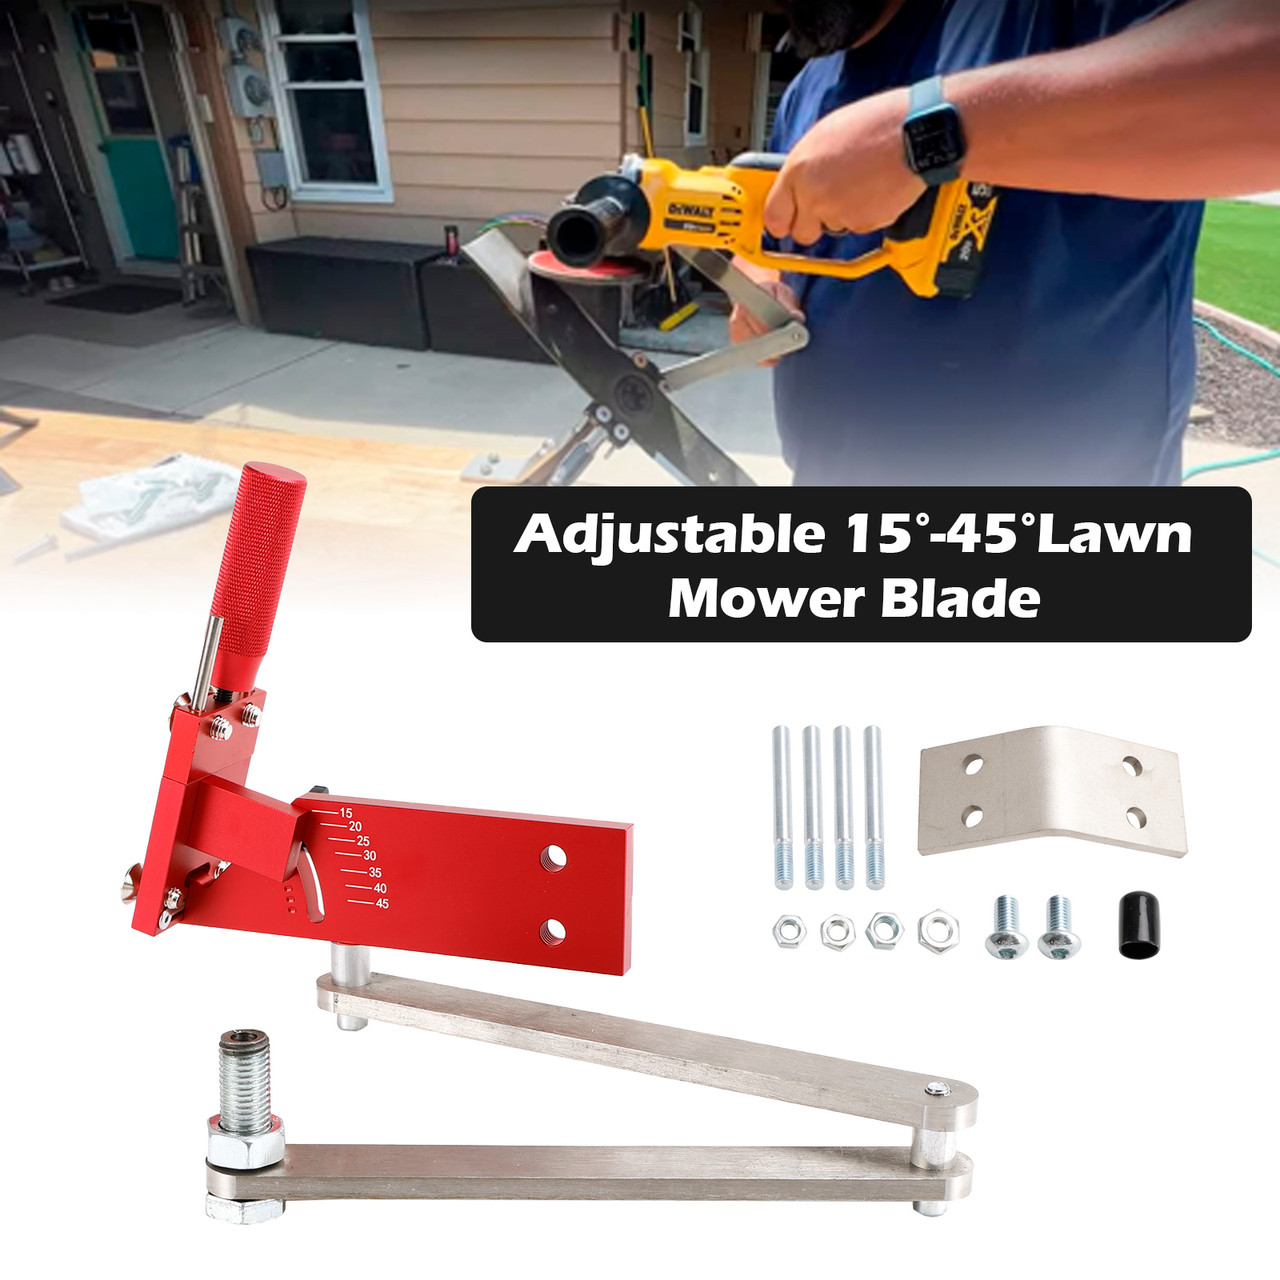 Sharpener Model 5005 Lawn Mower Blade For Straight Standard 15隆茫-45隆茫Adjustable